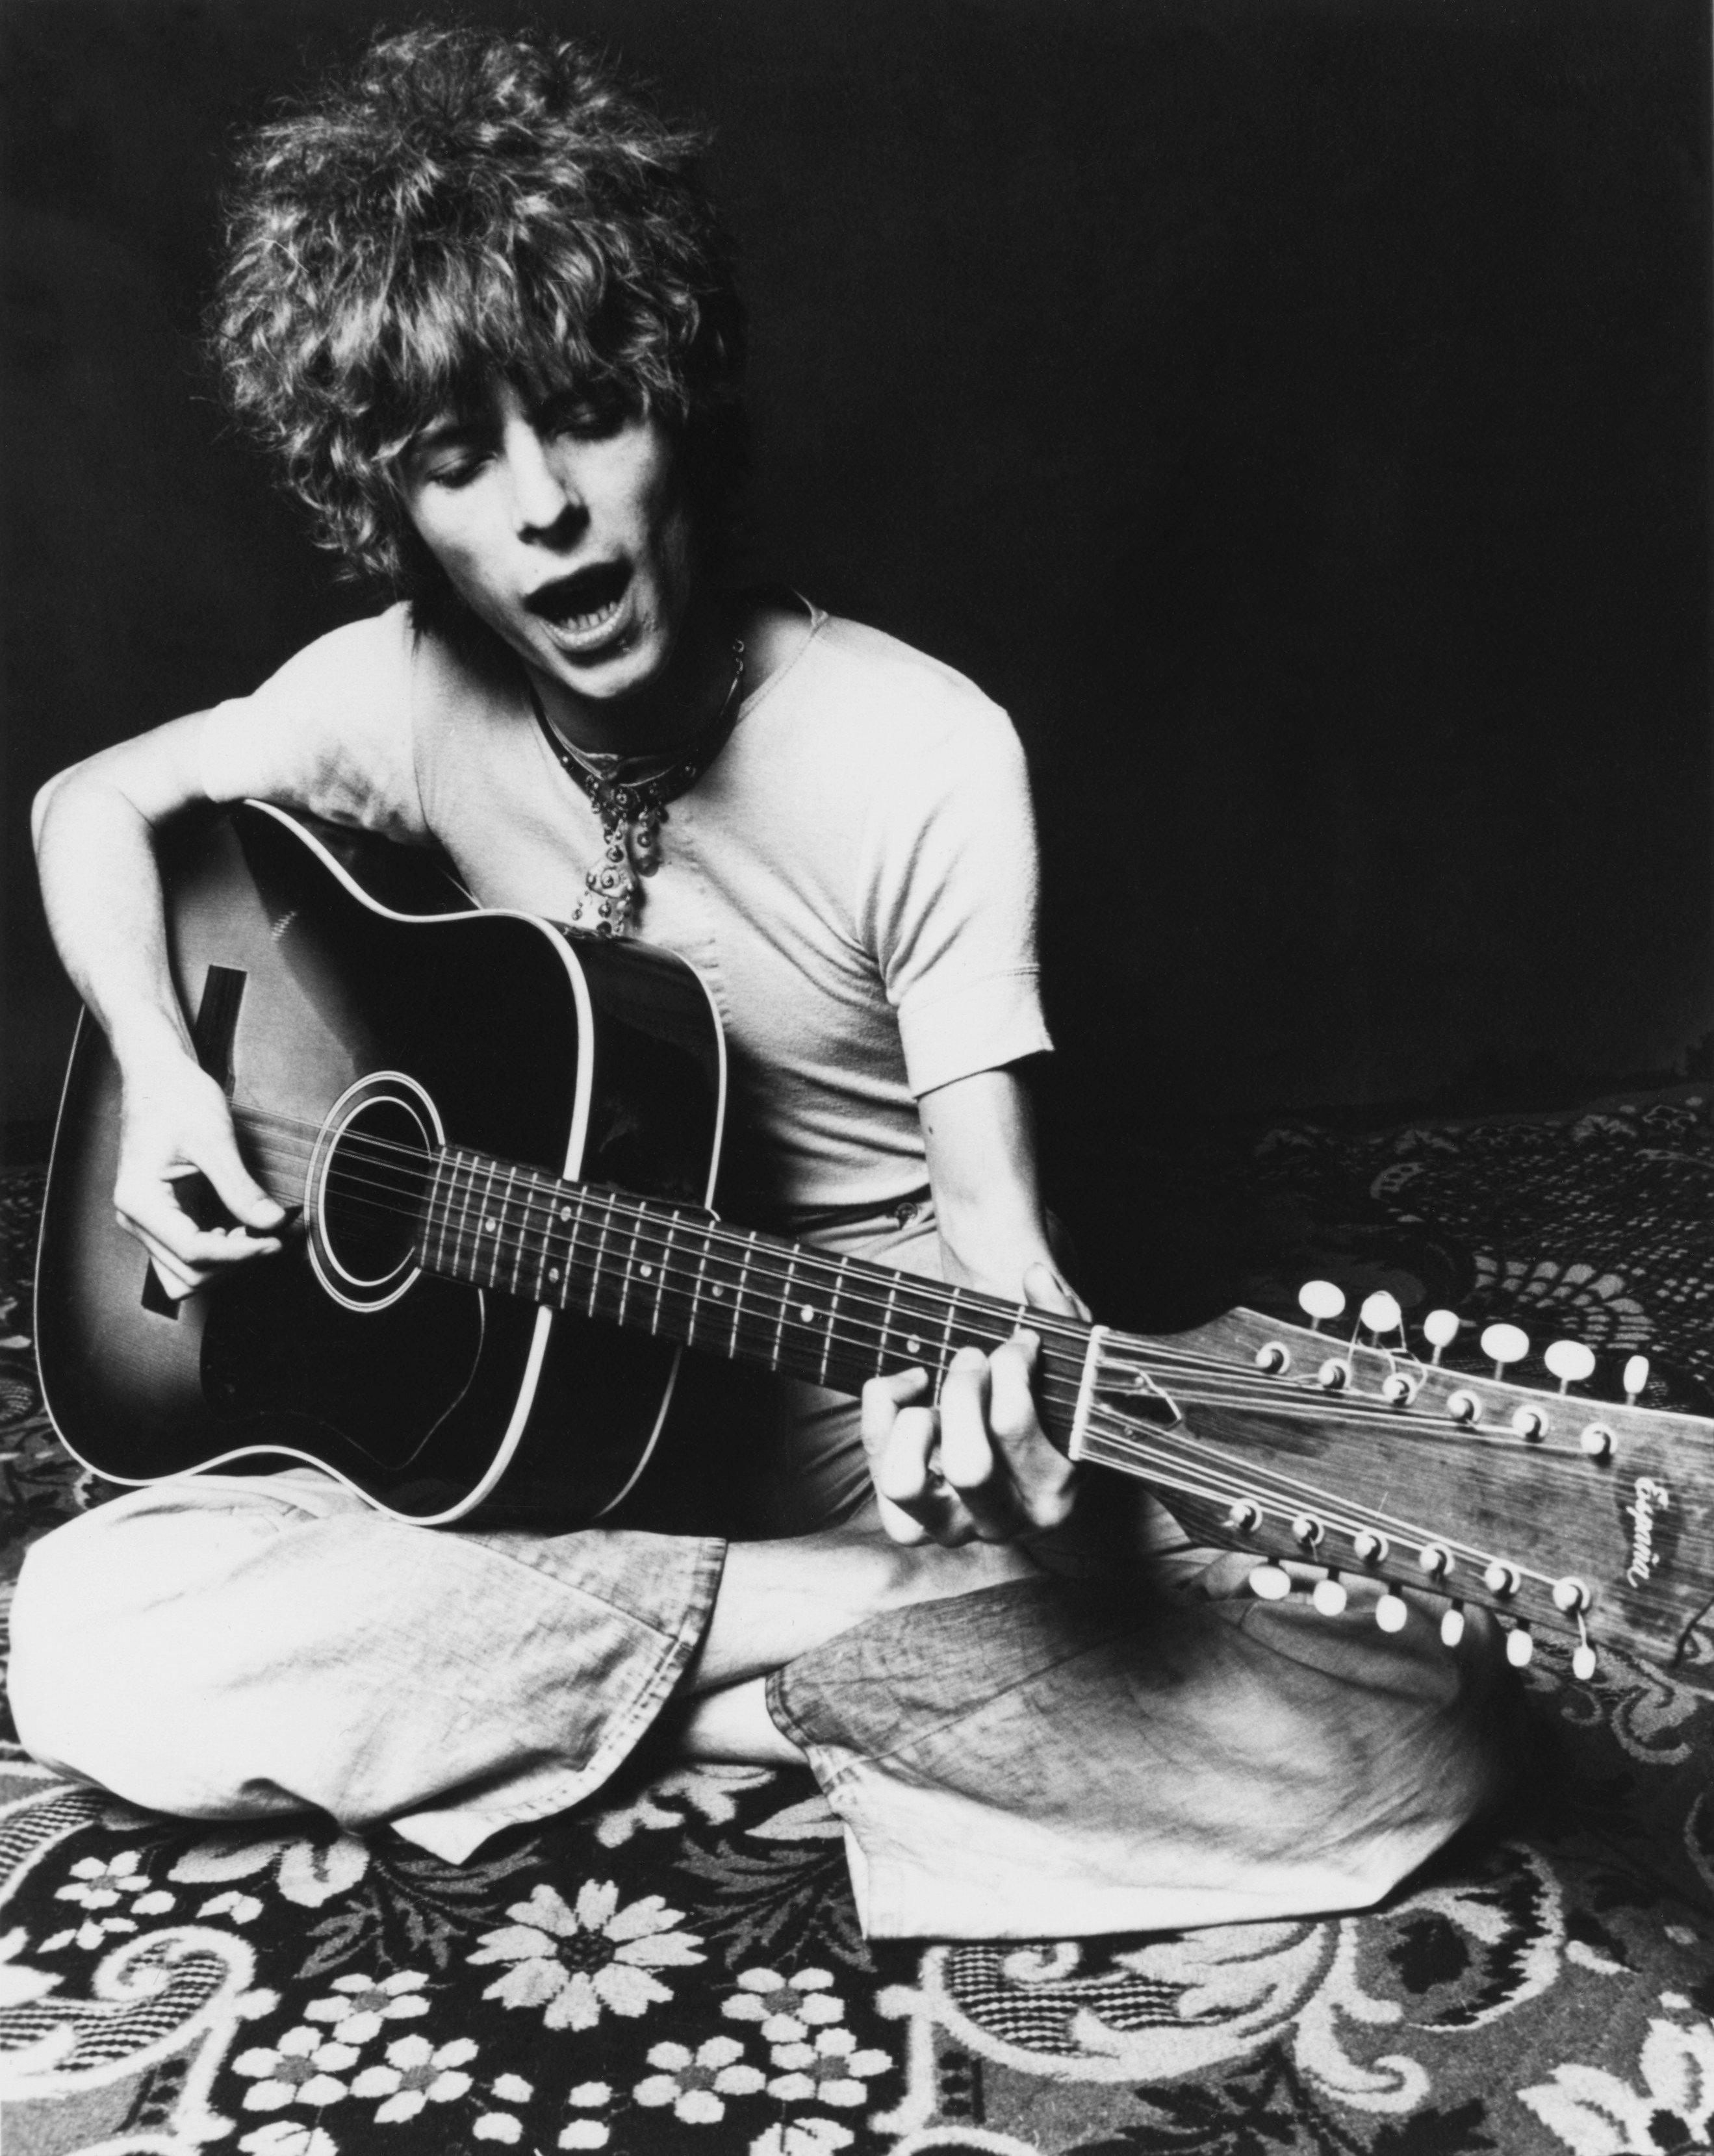 David Bowie in 1969